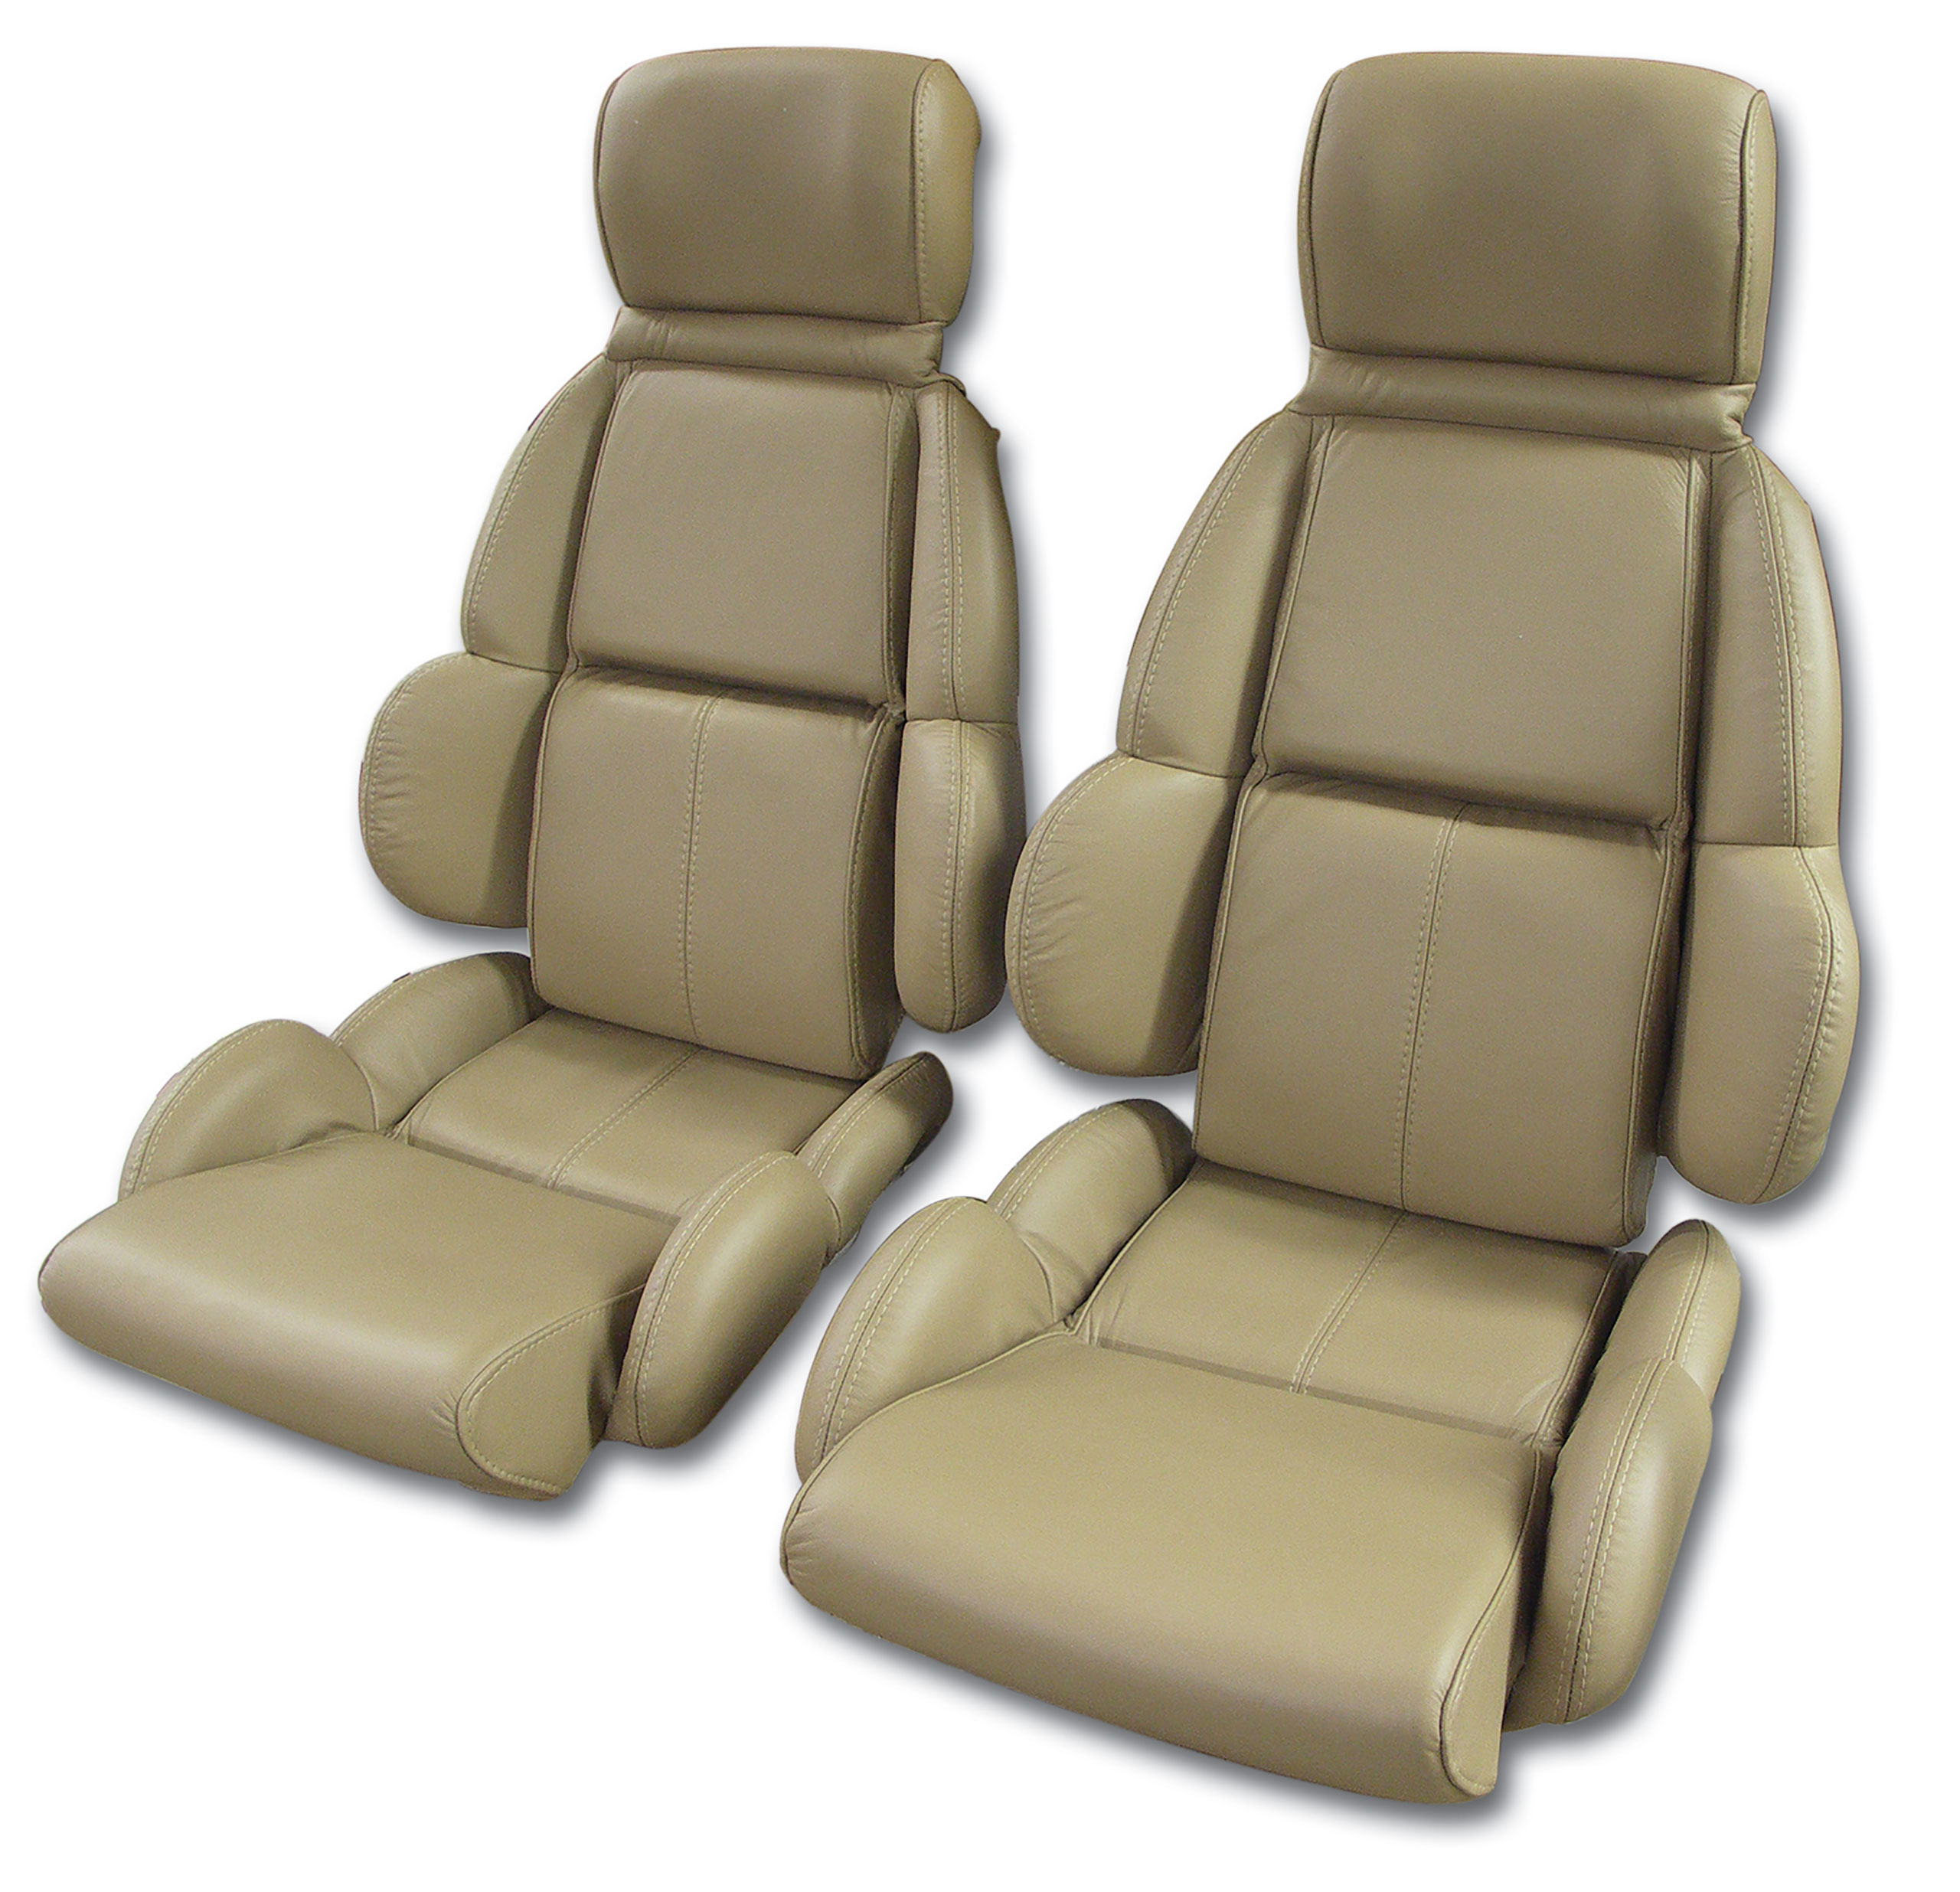 1992 Corvette C4 Leather Seat Covers- Beige Standard CA-420482 